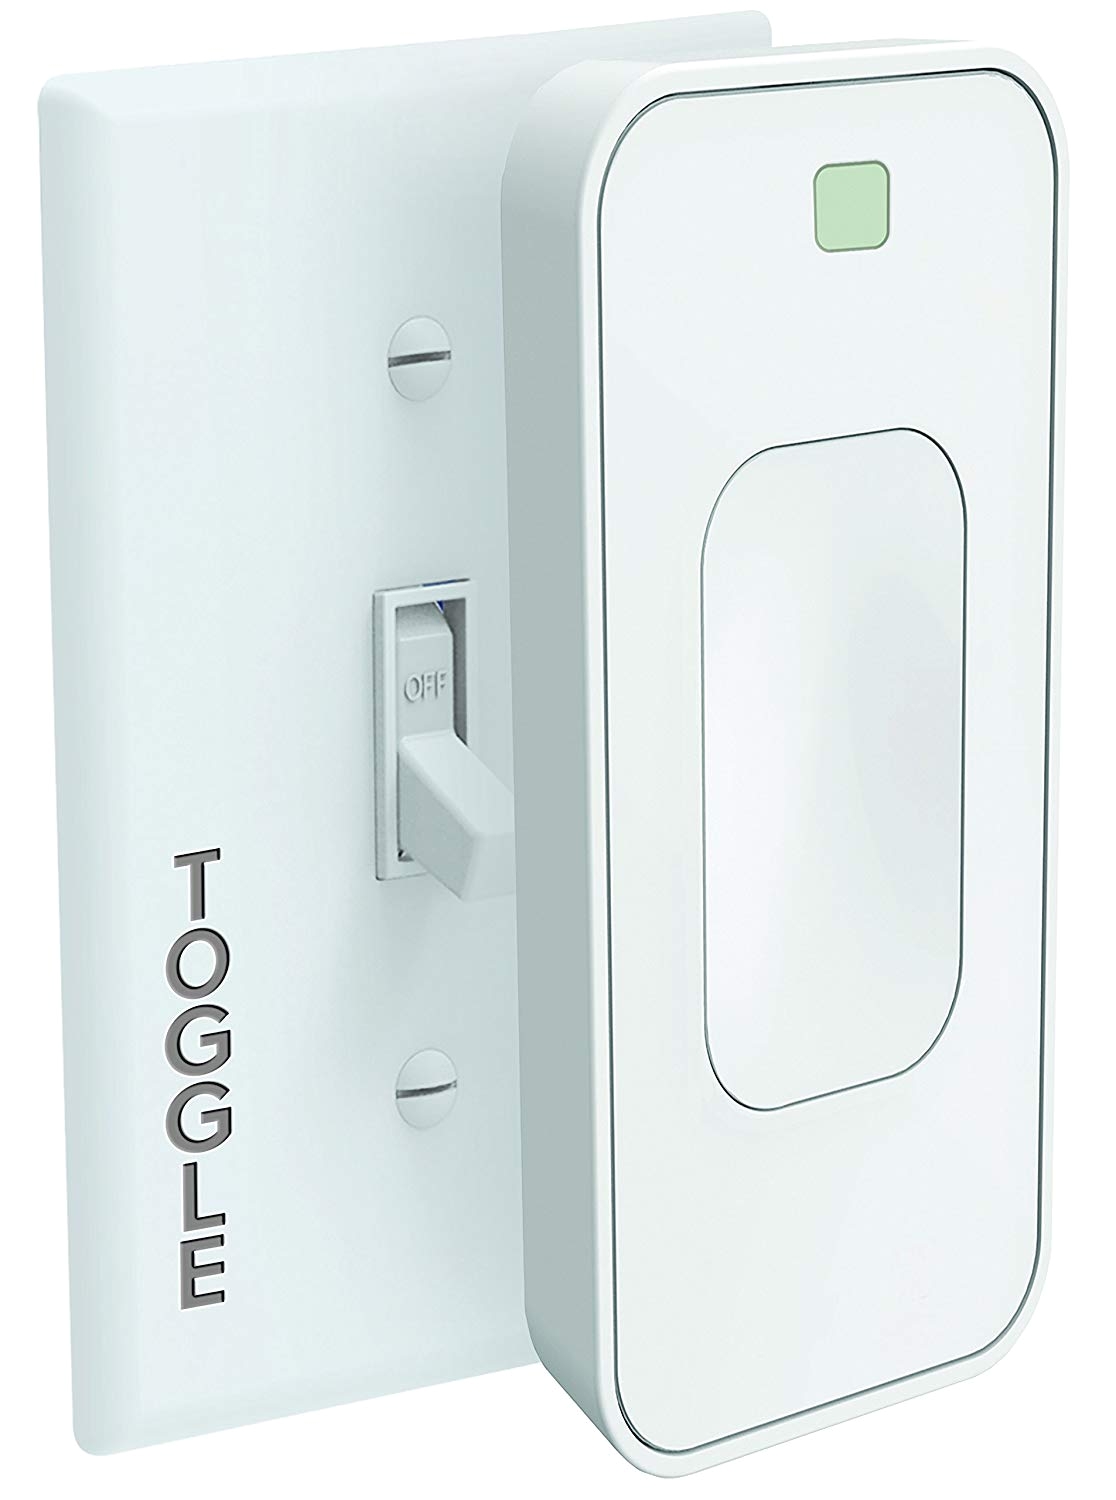 Basic Wireless Light Switch Kit Switchmate Tsm003wamz Bright toggle Tsm003w Amazon Com